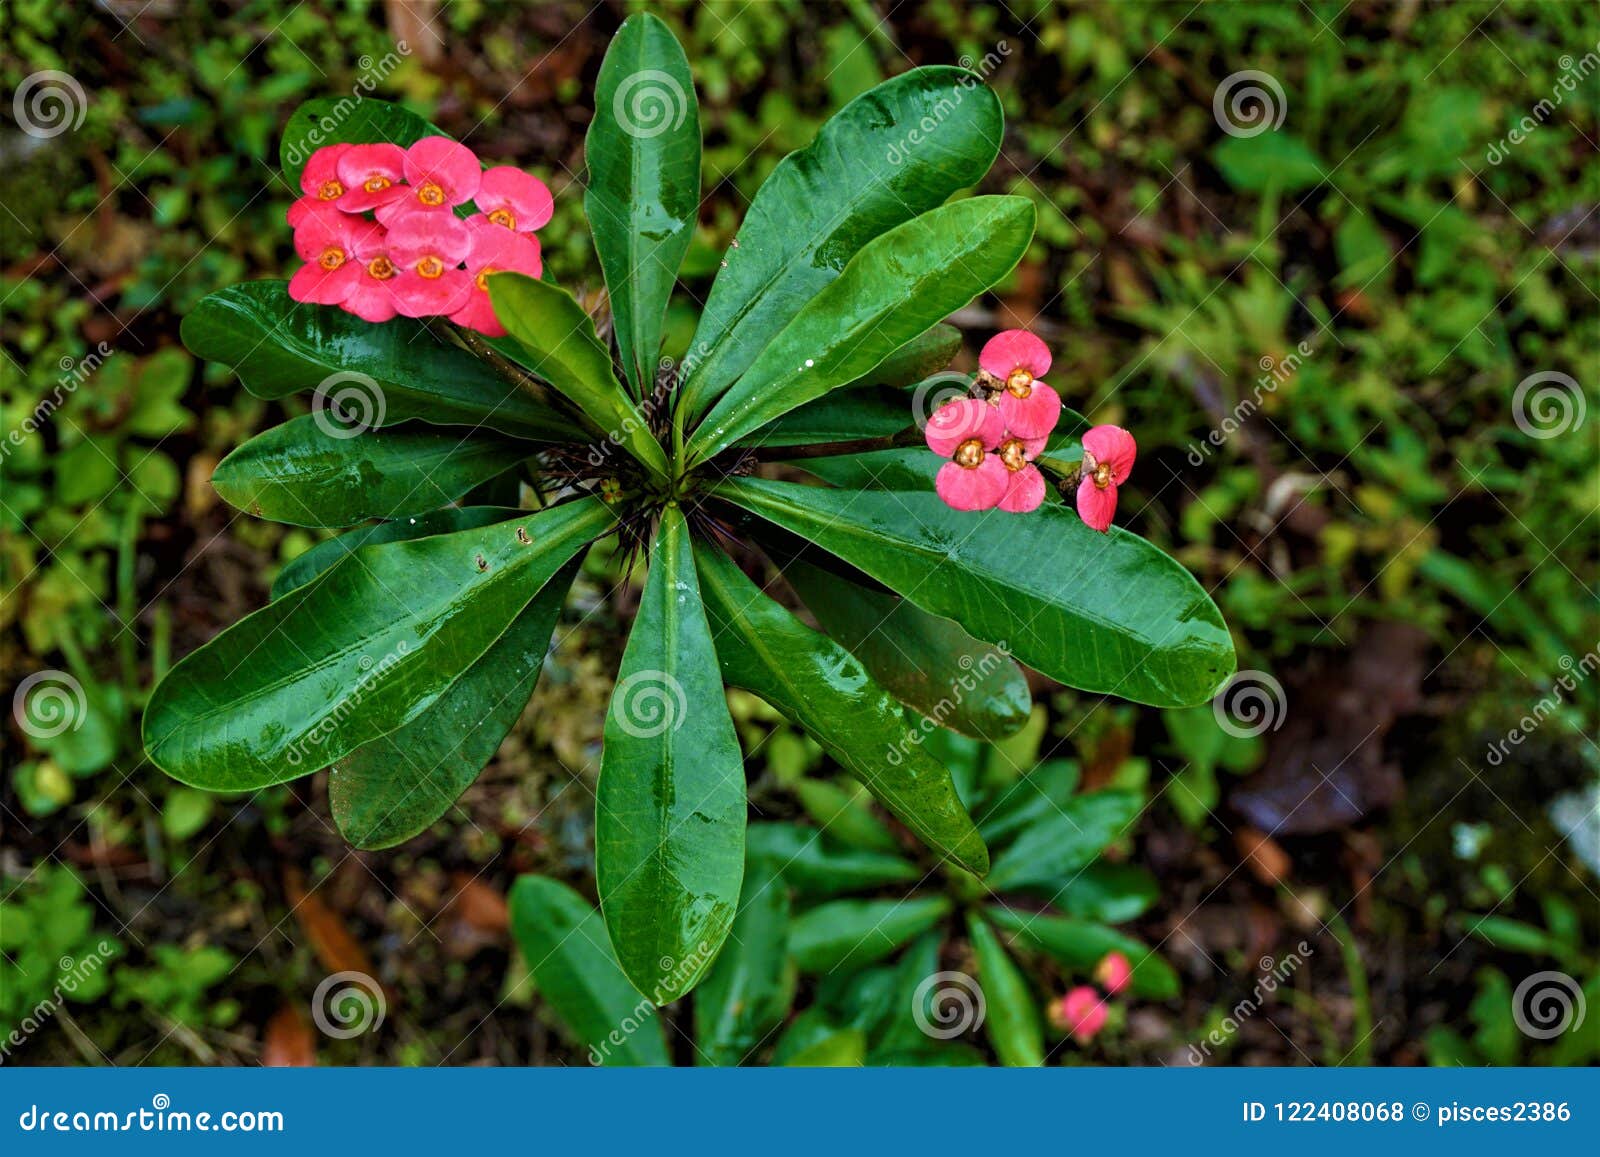 psychotria poeppigiana plant in the secret gardens